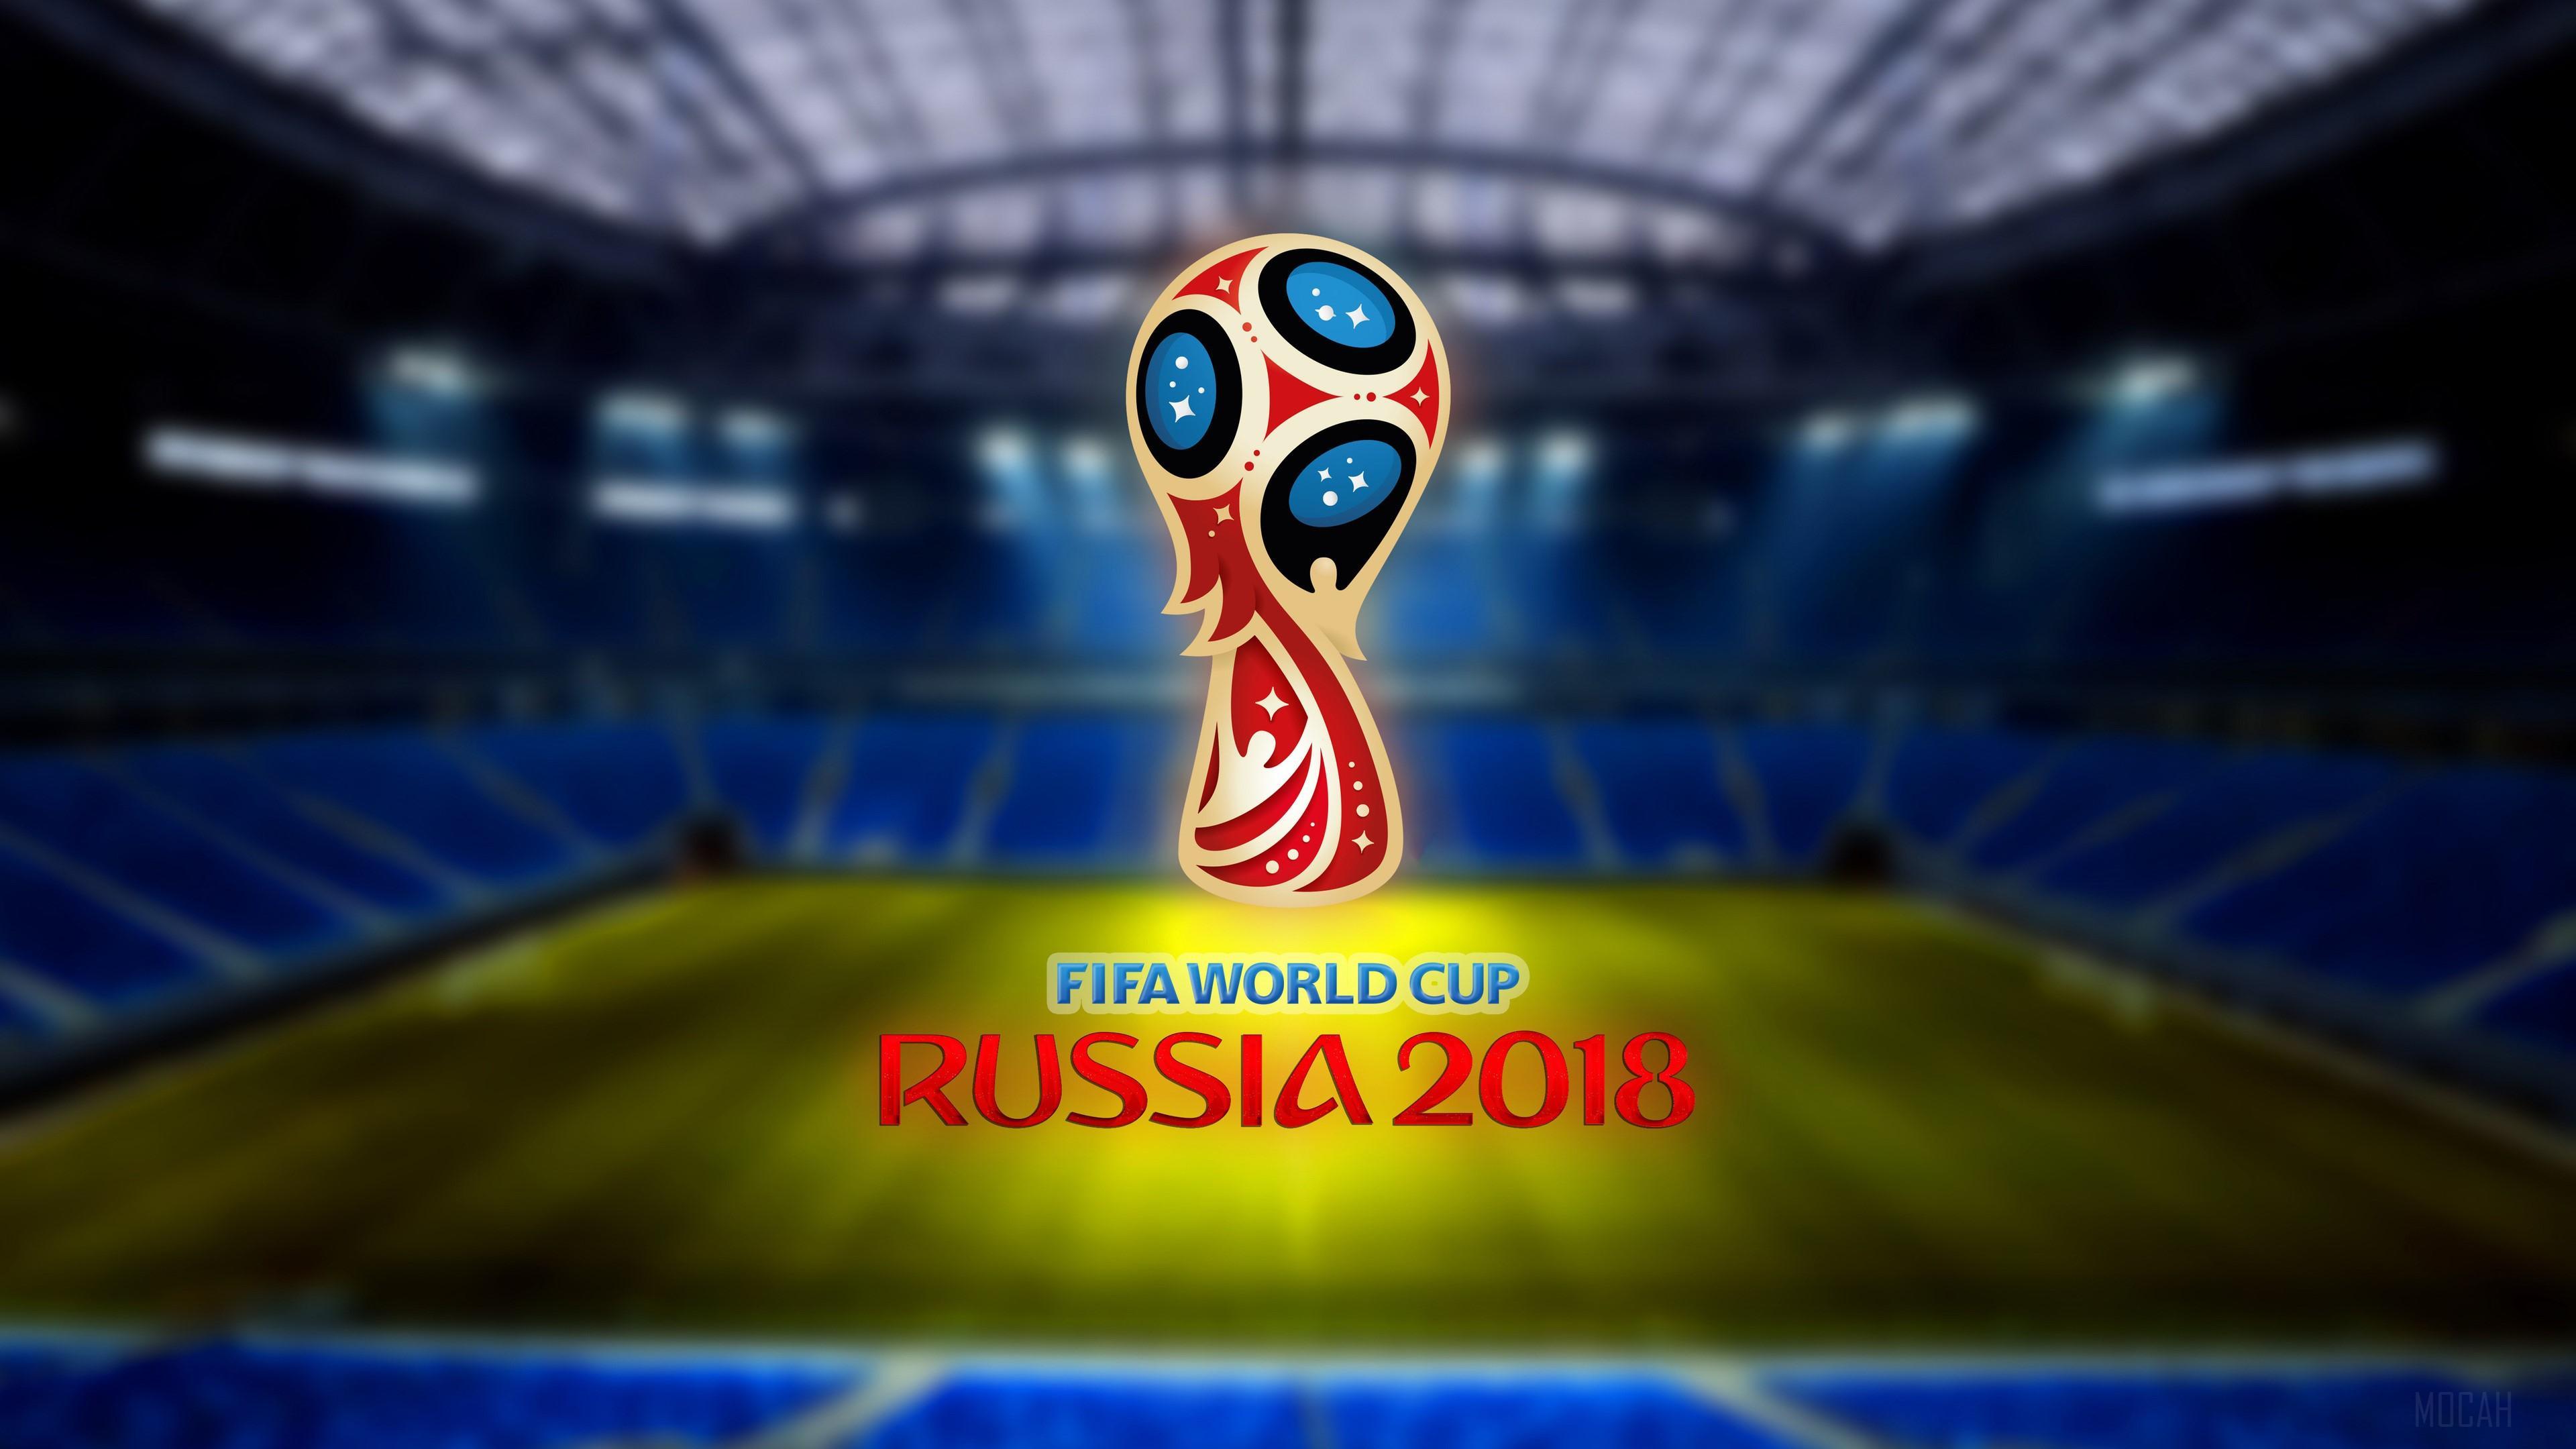 HD wallpaper, Fifa World Cup Russia 2018 4K